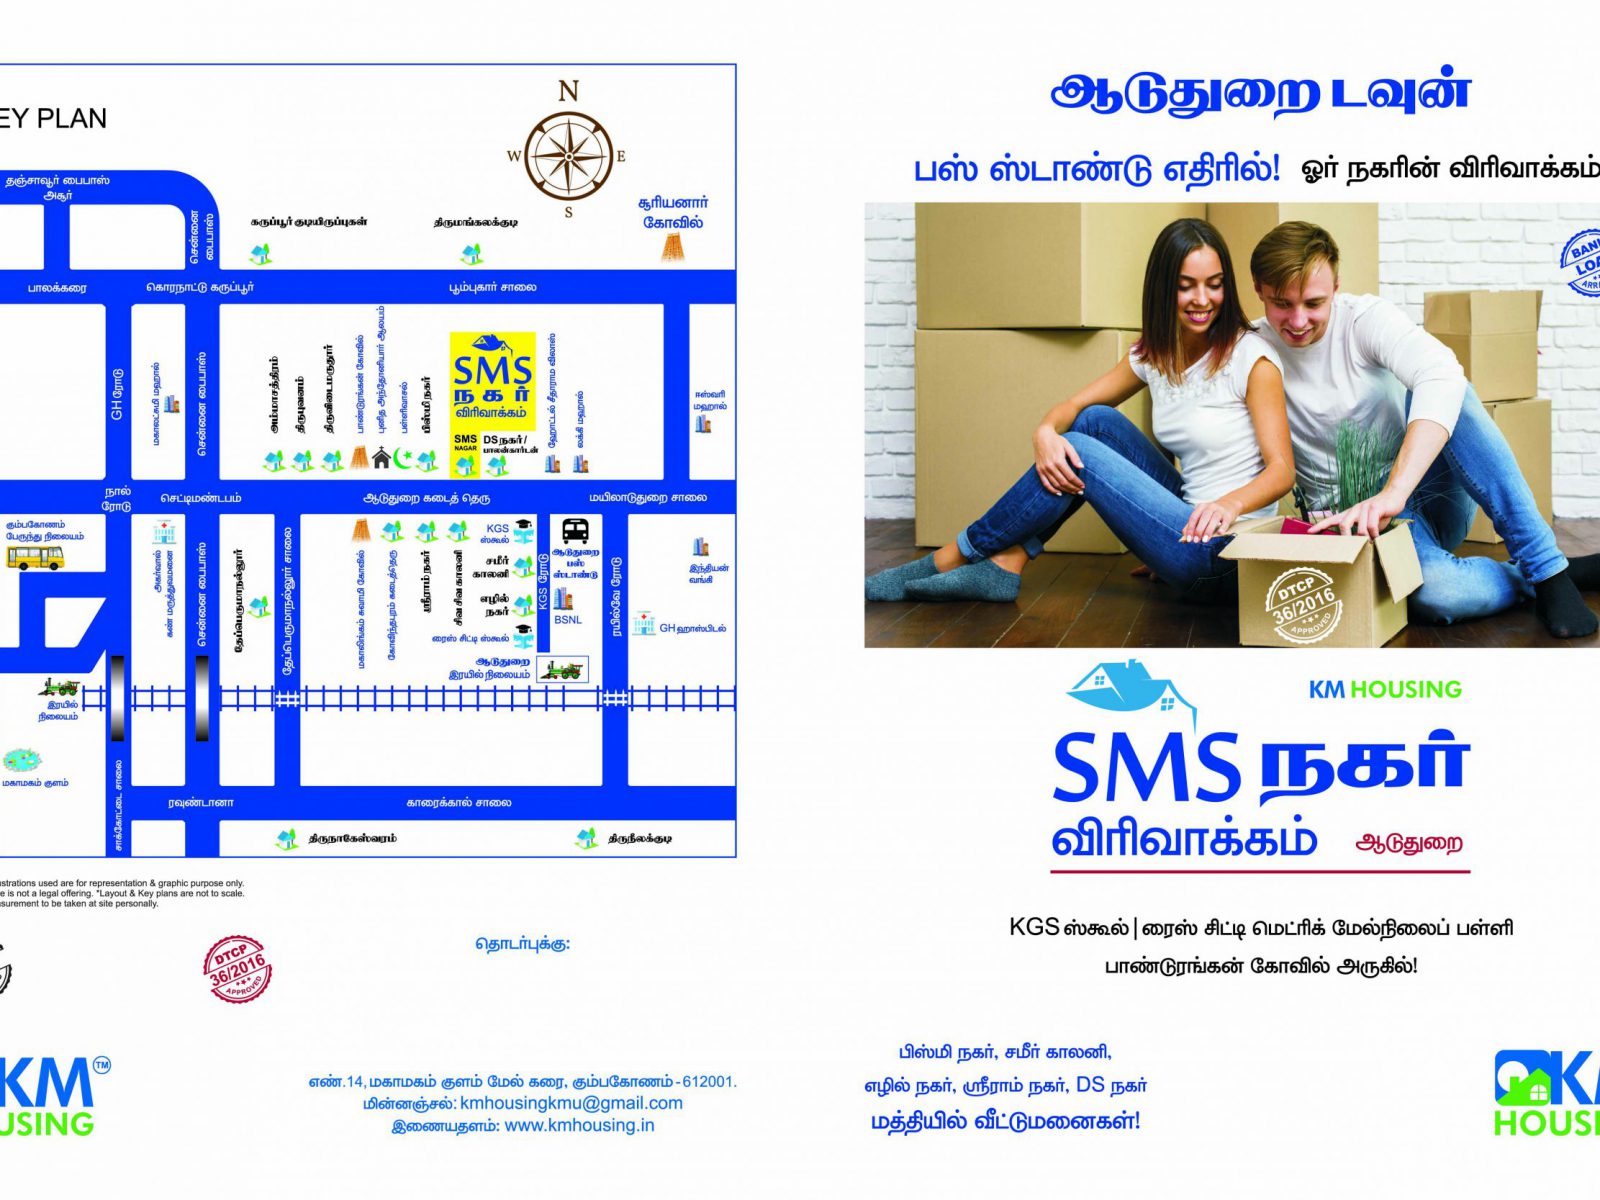 SMS keyplan